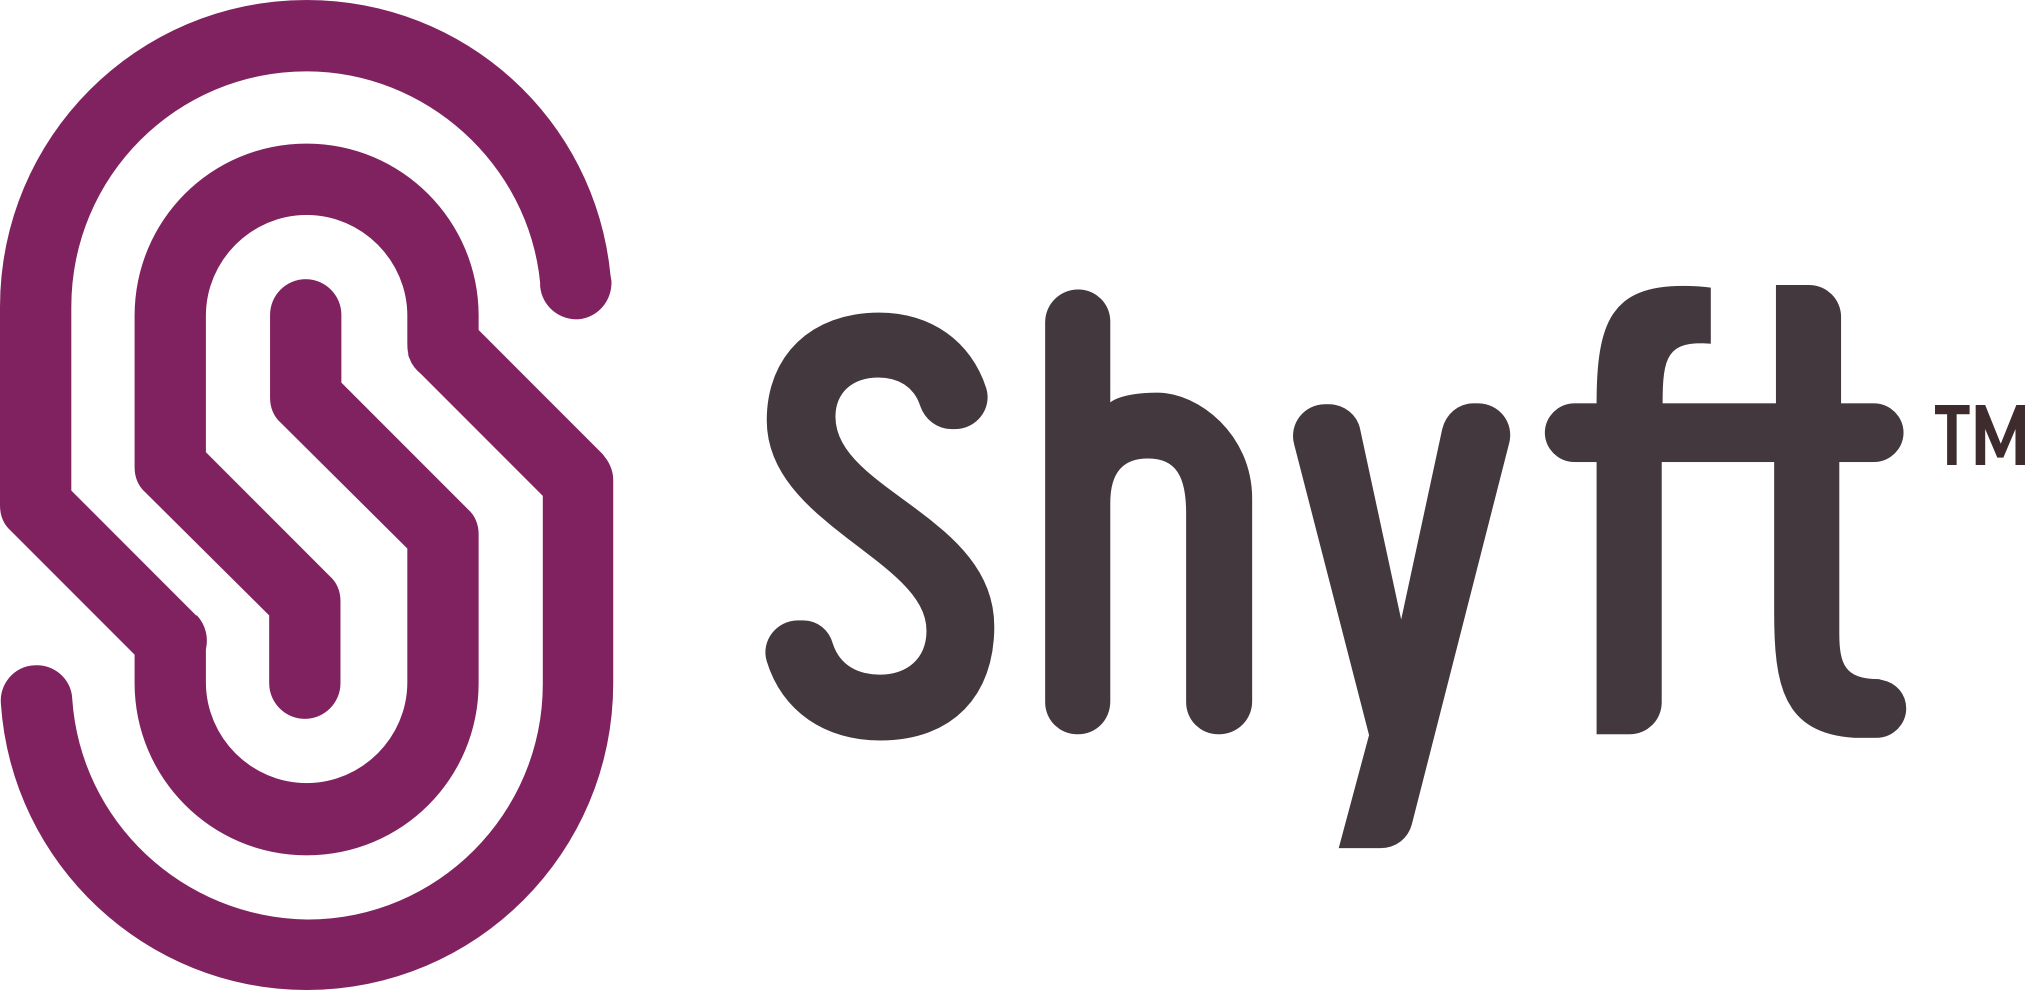 Shyft Network